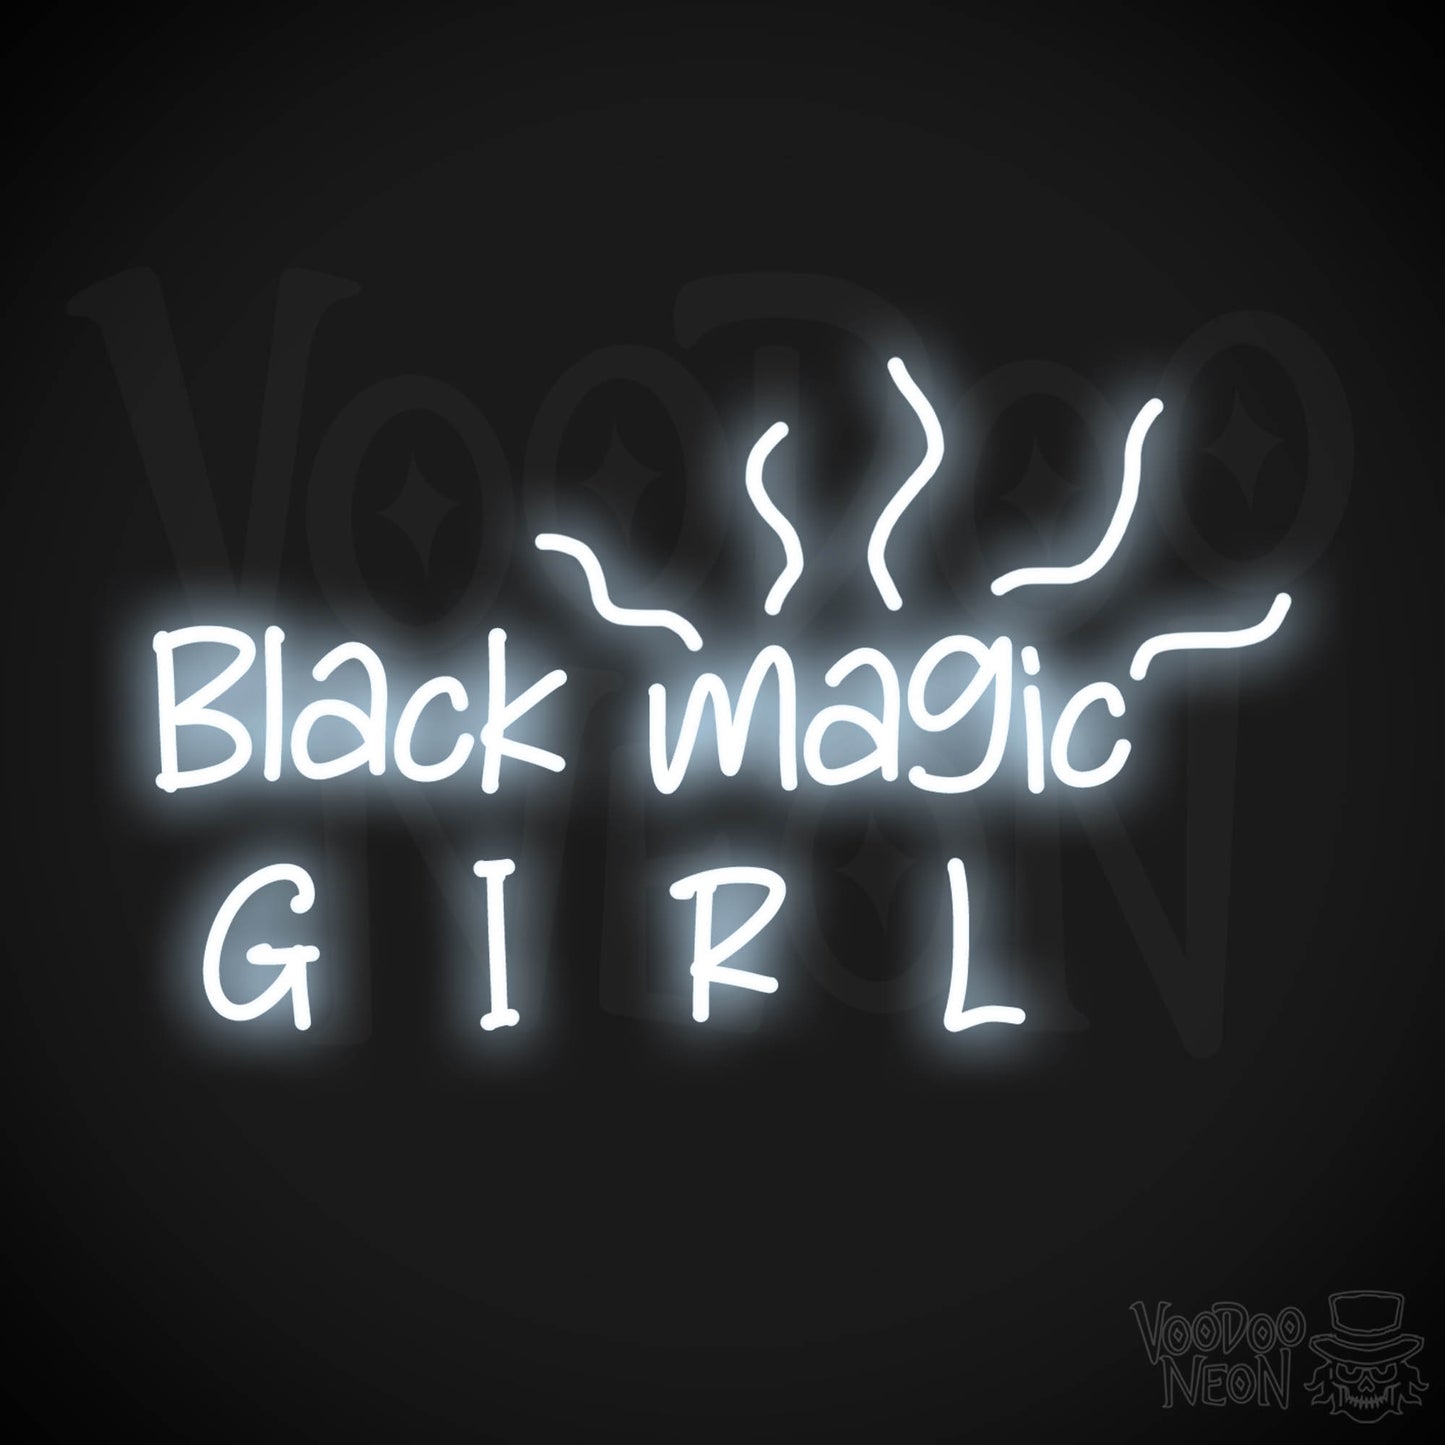 Black Magic Girl LED Neon - Cool White